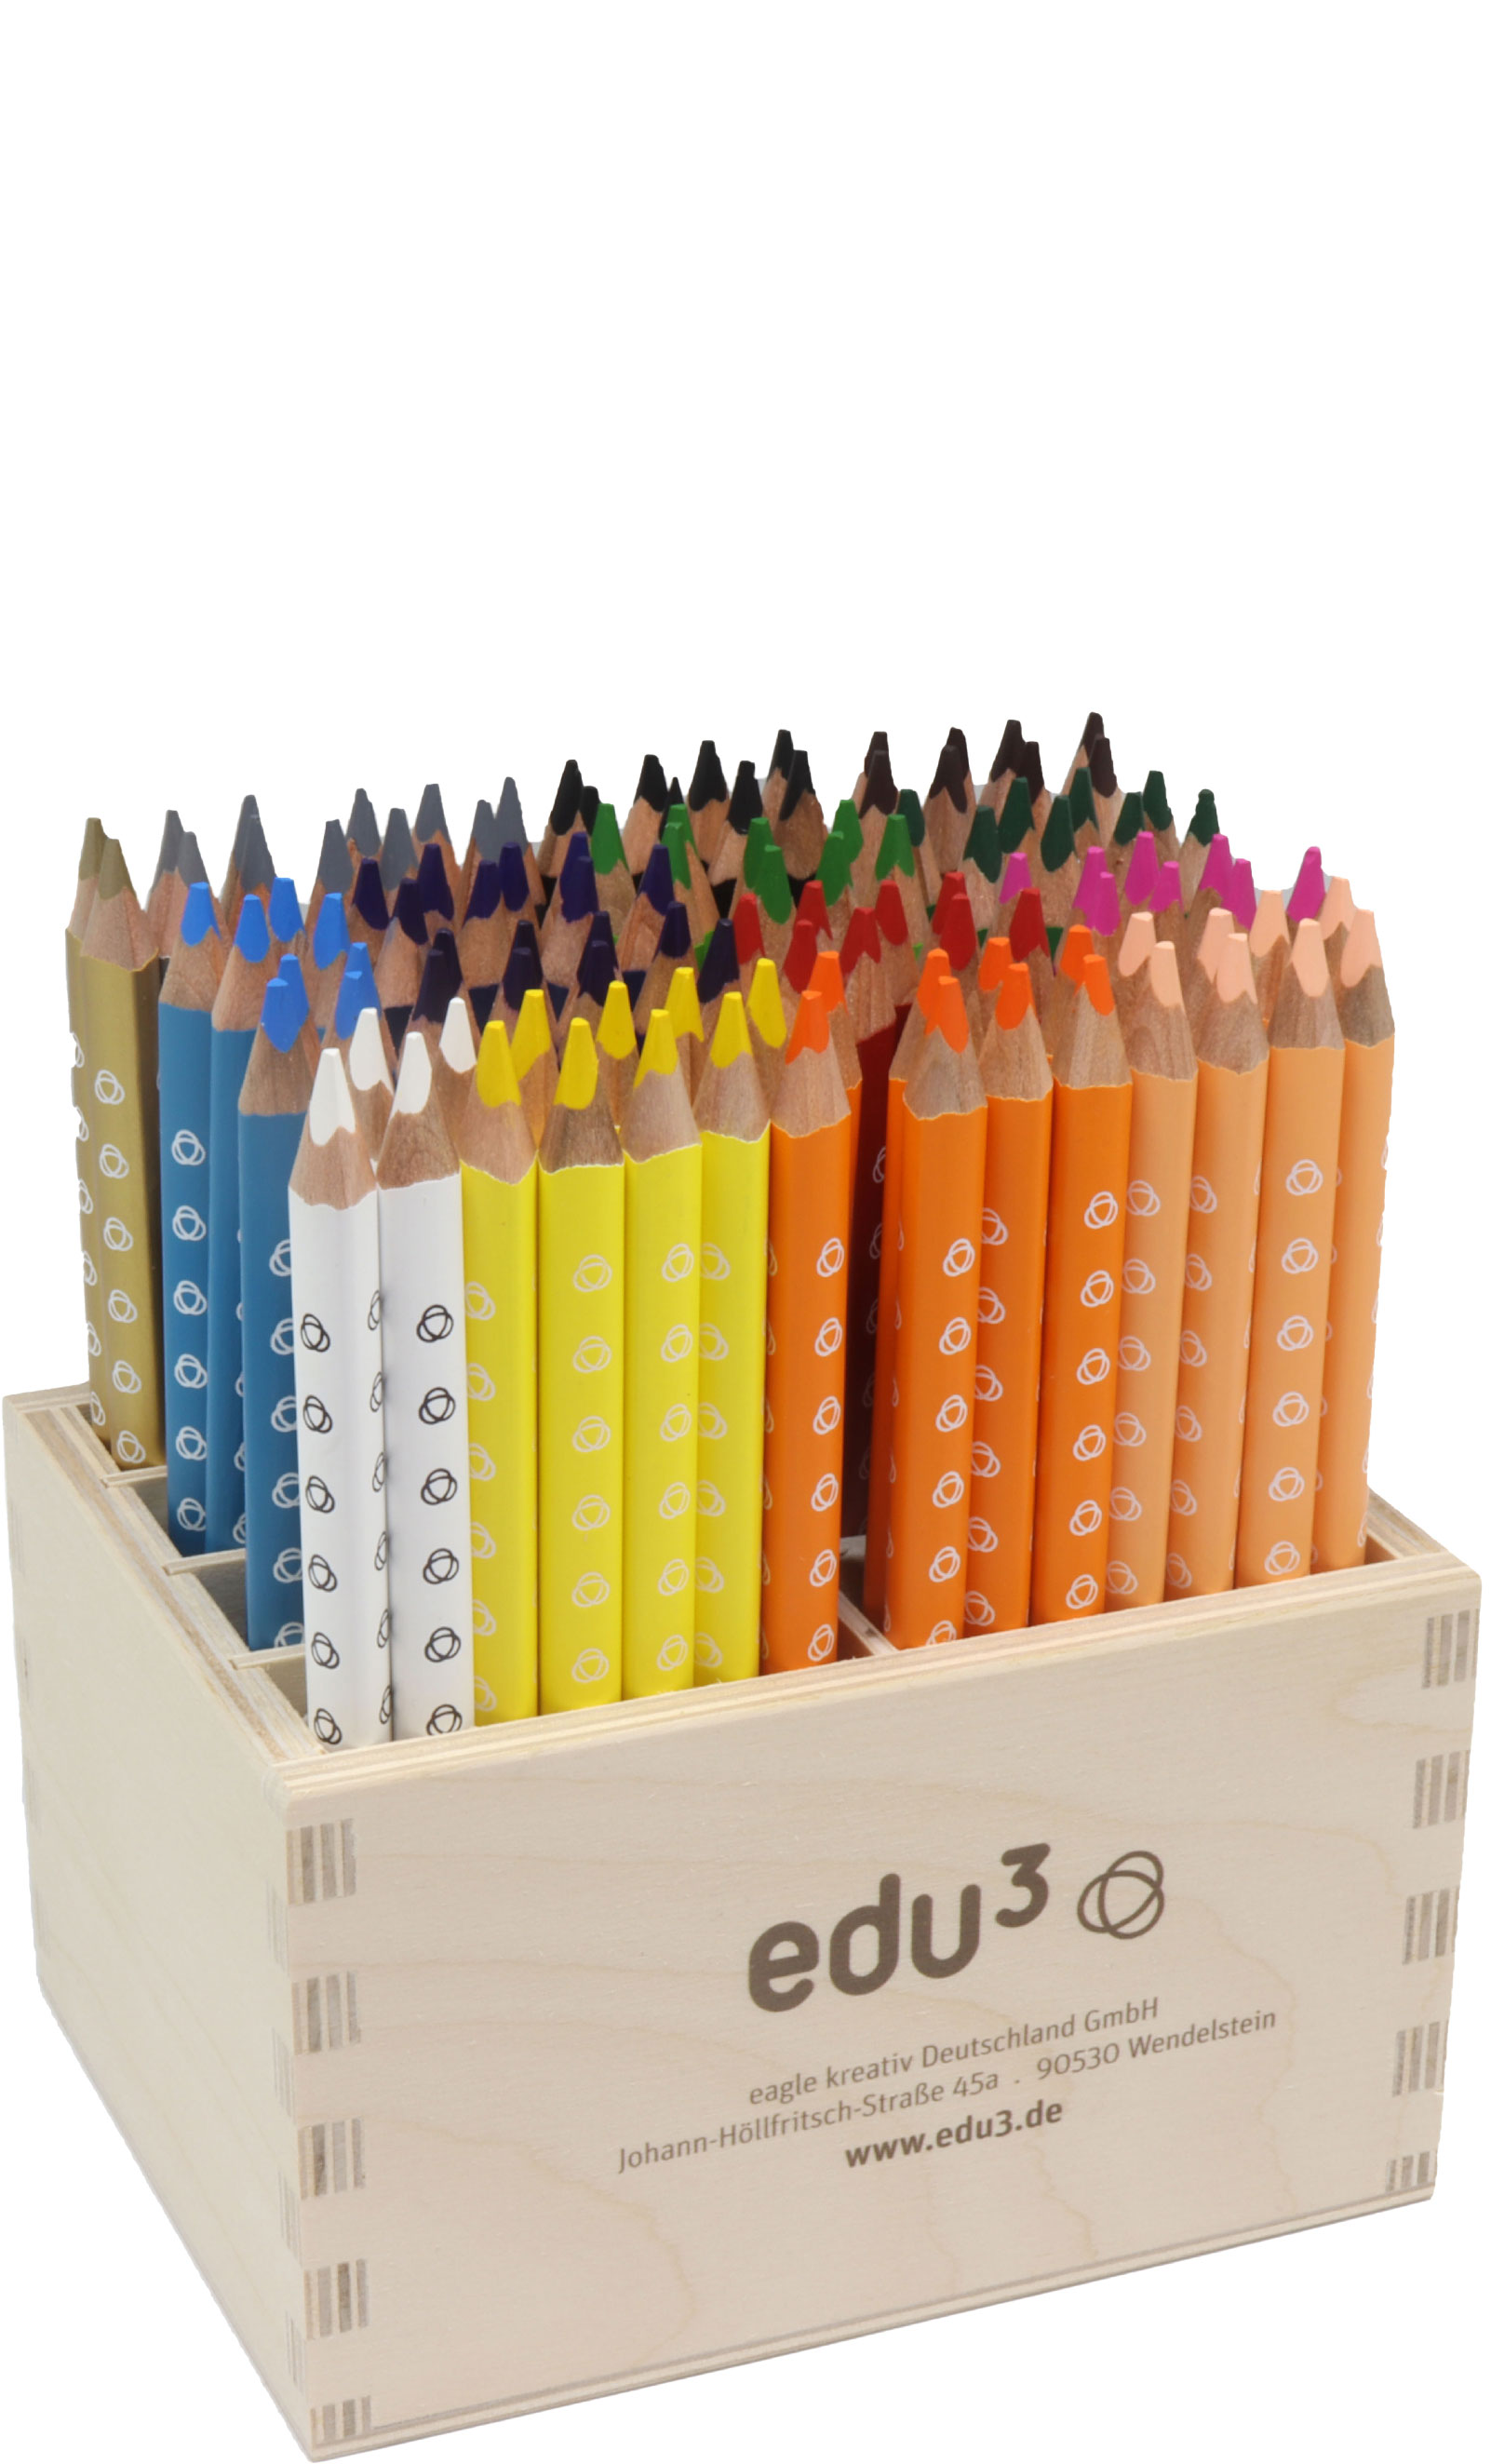 edu³ Jumbo colored pencil tri wooden display